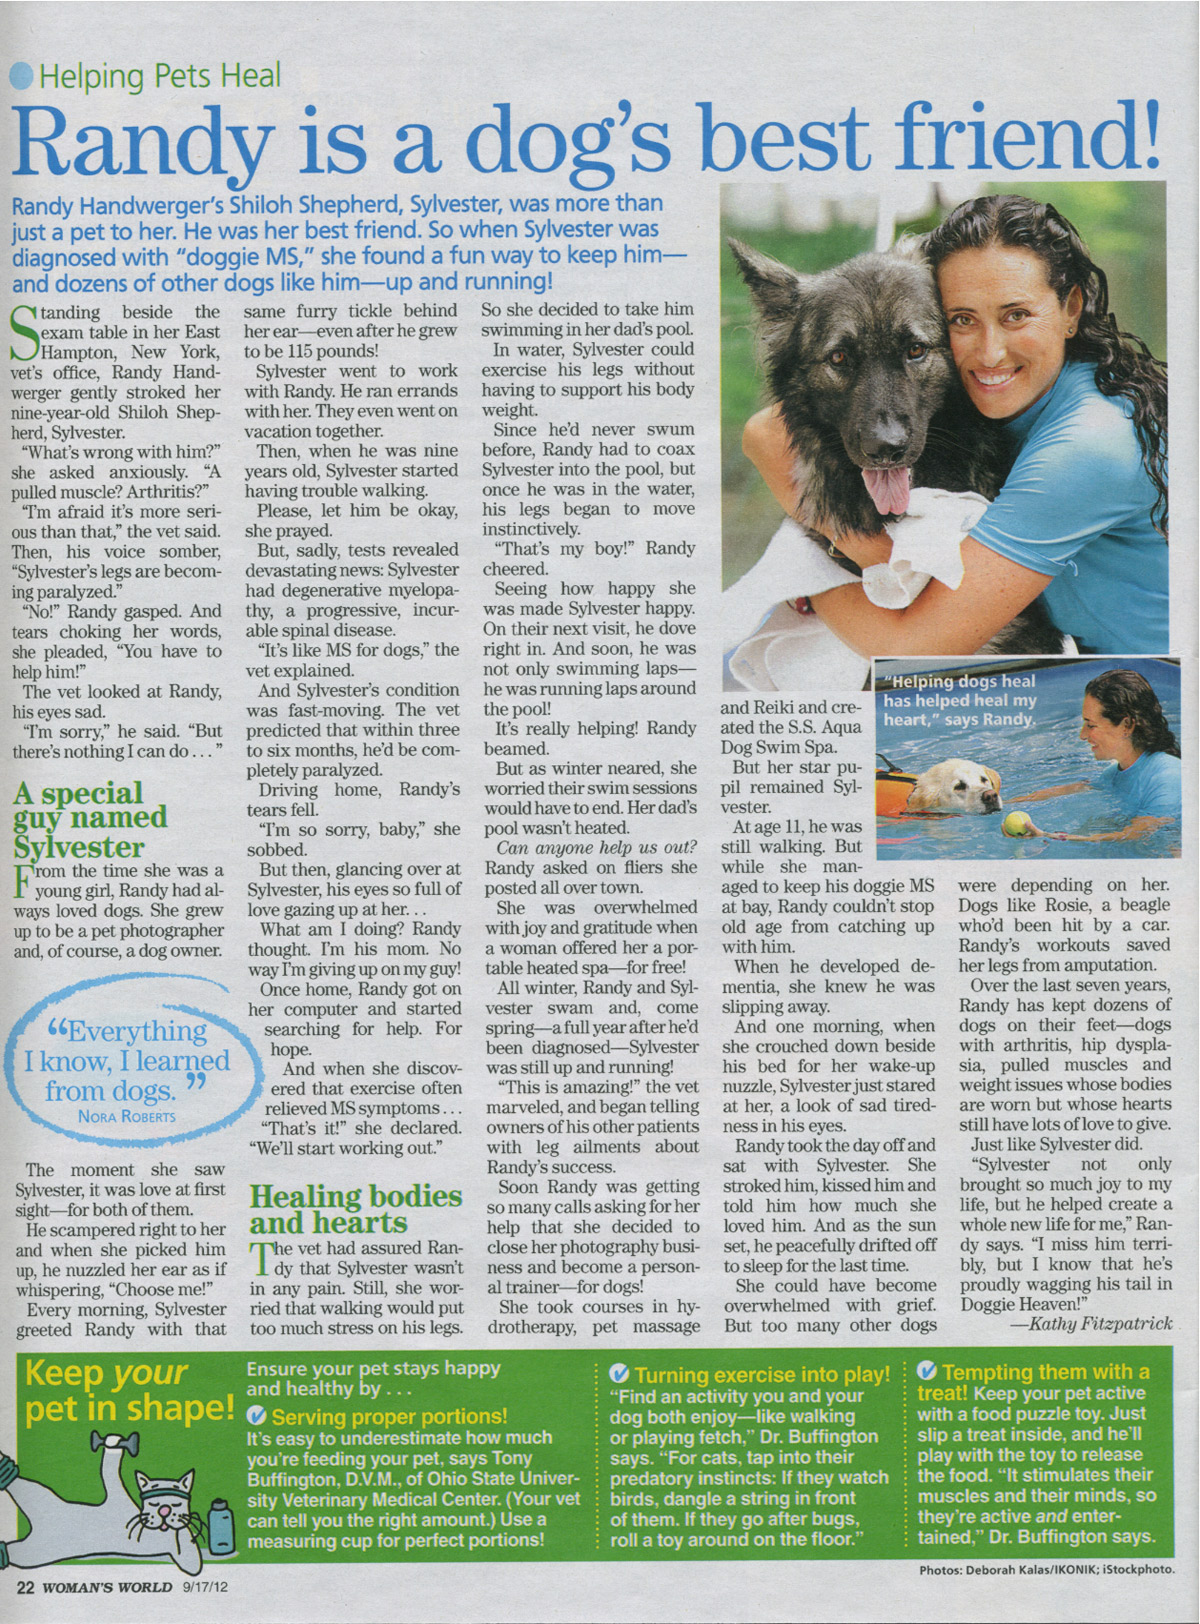 Woman's World Article on S.S. Aqua Dog Spa and Randy